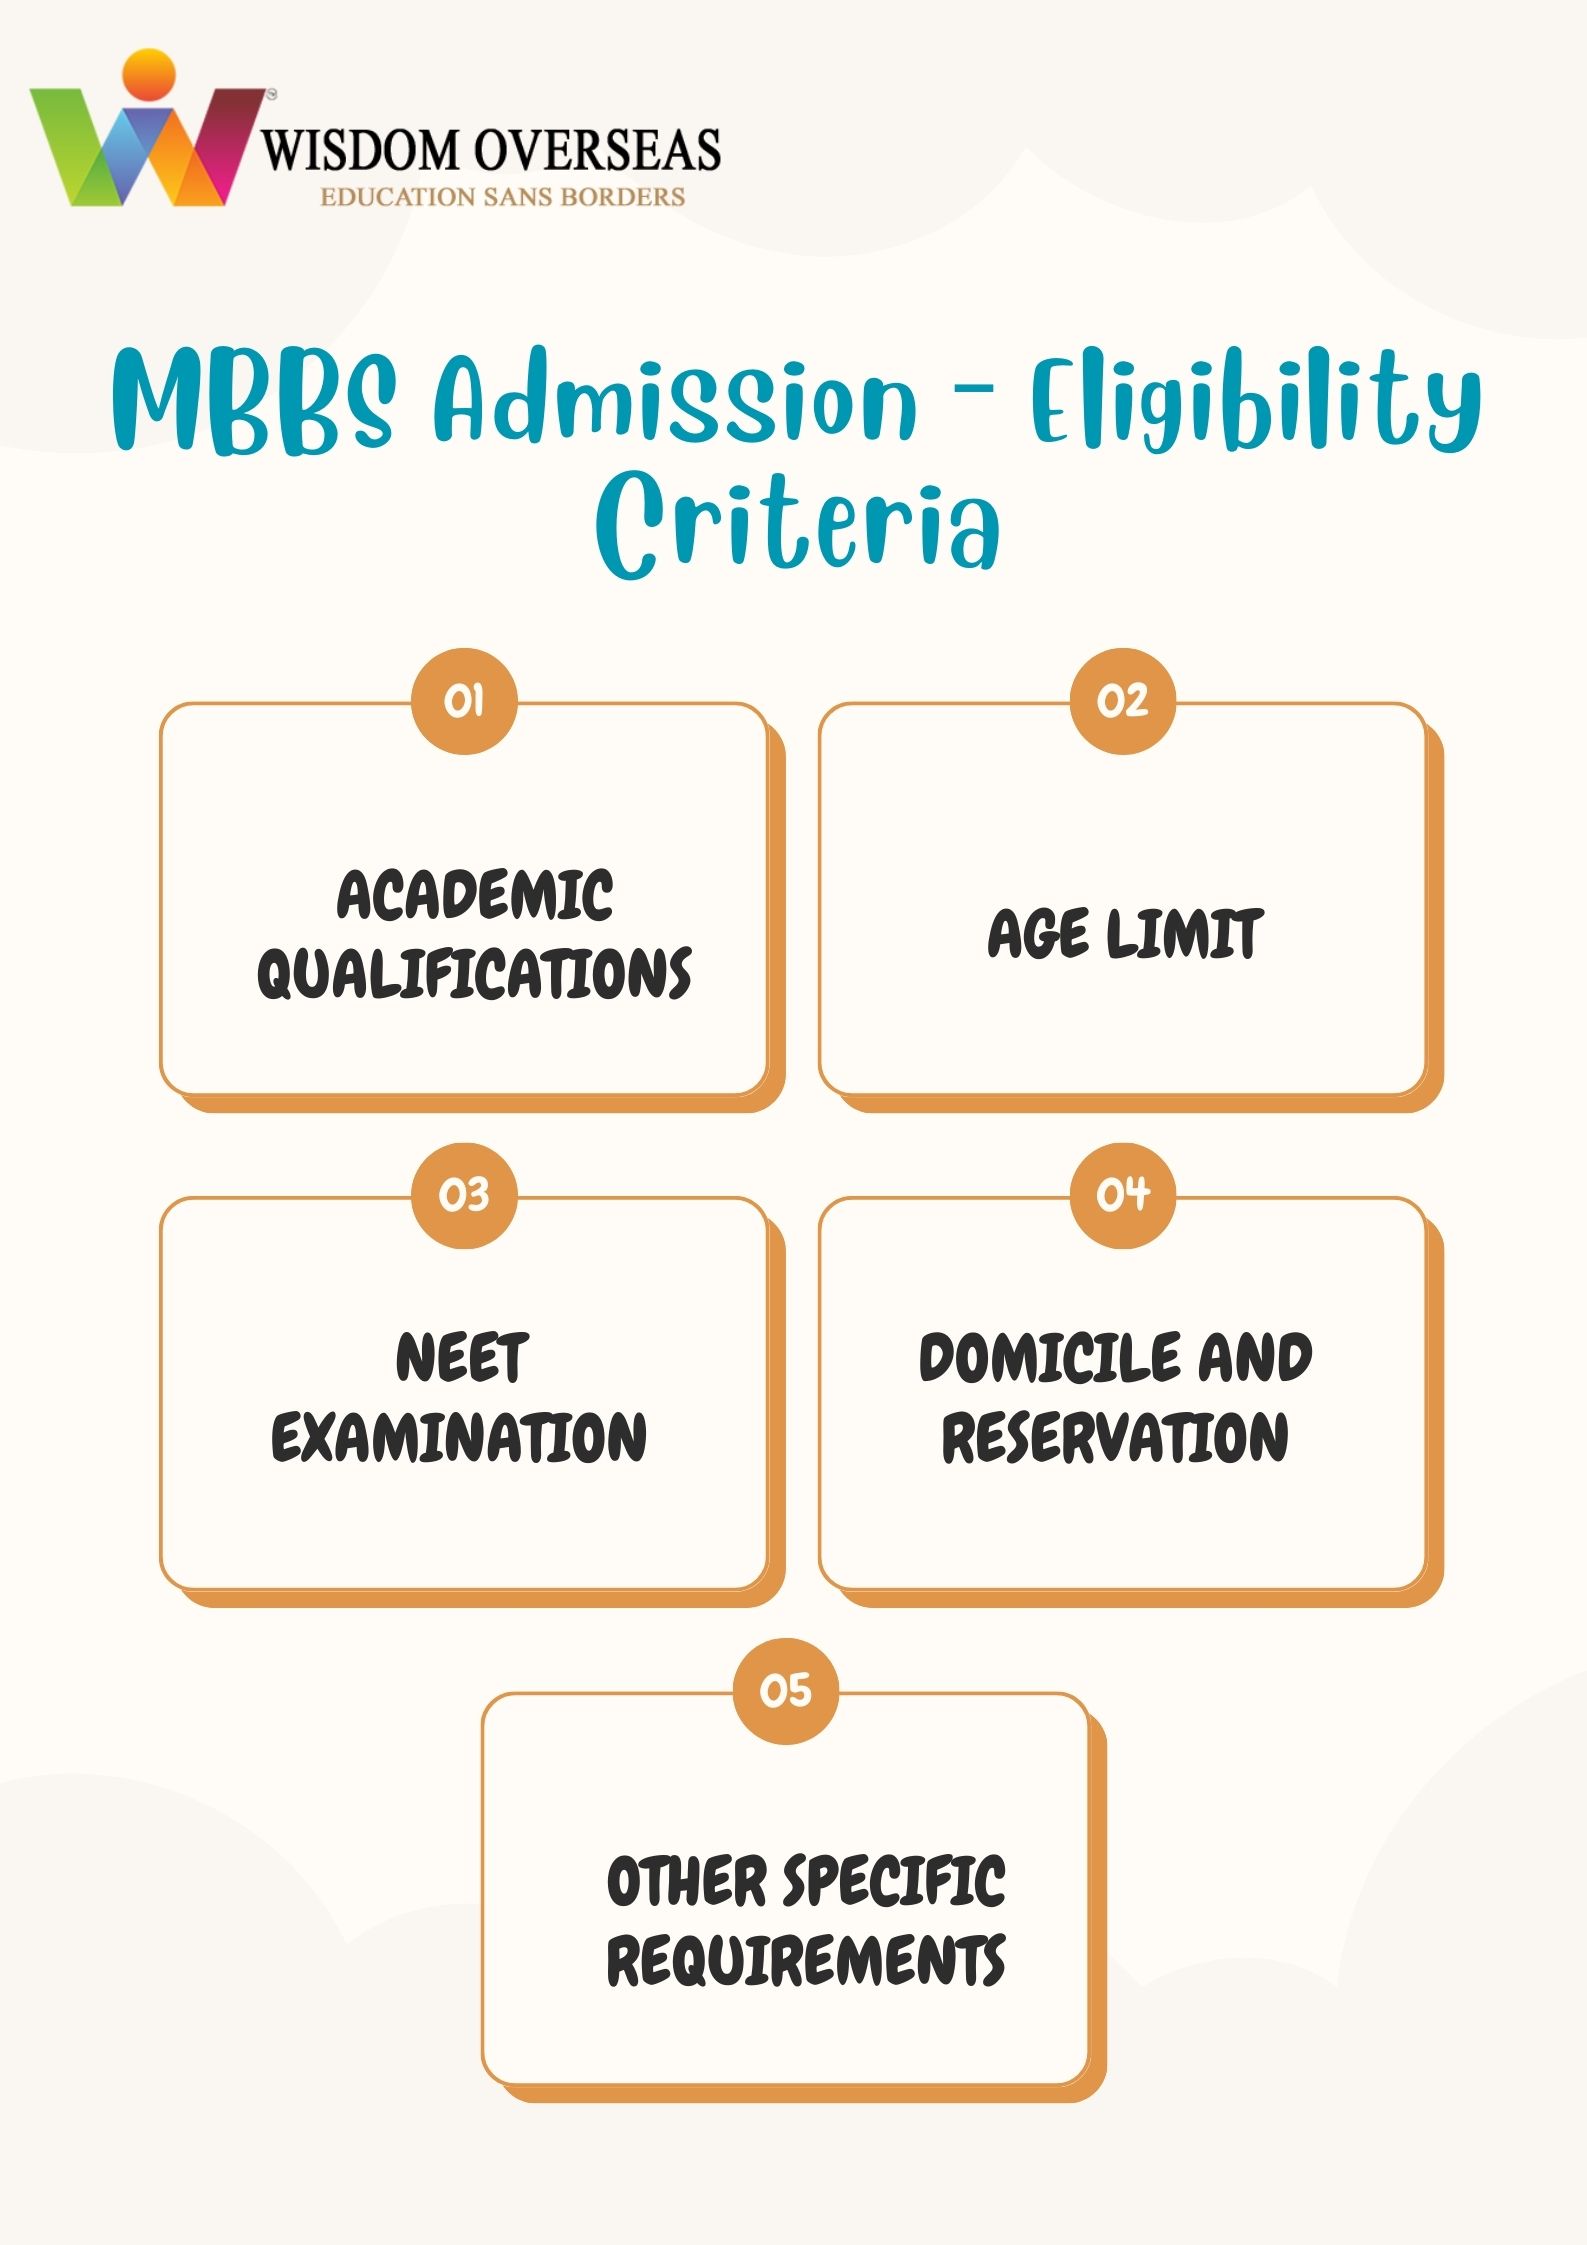 MBBS Admission – Eligibility Criteria